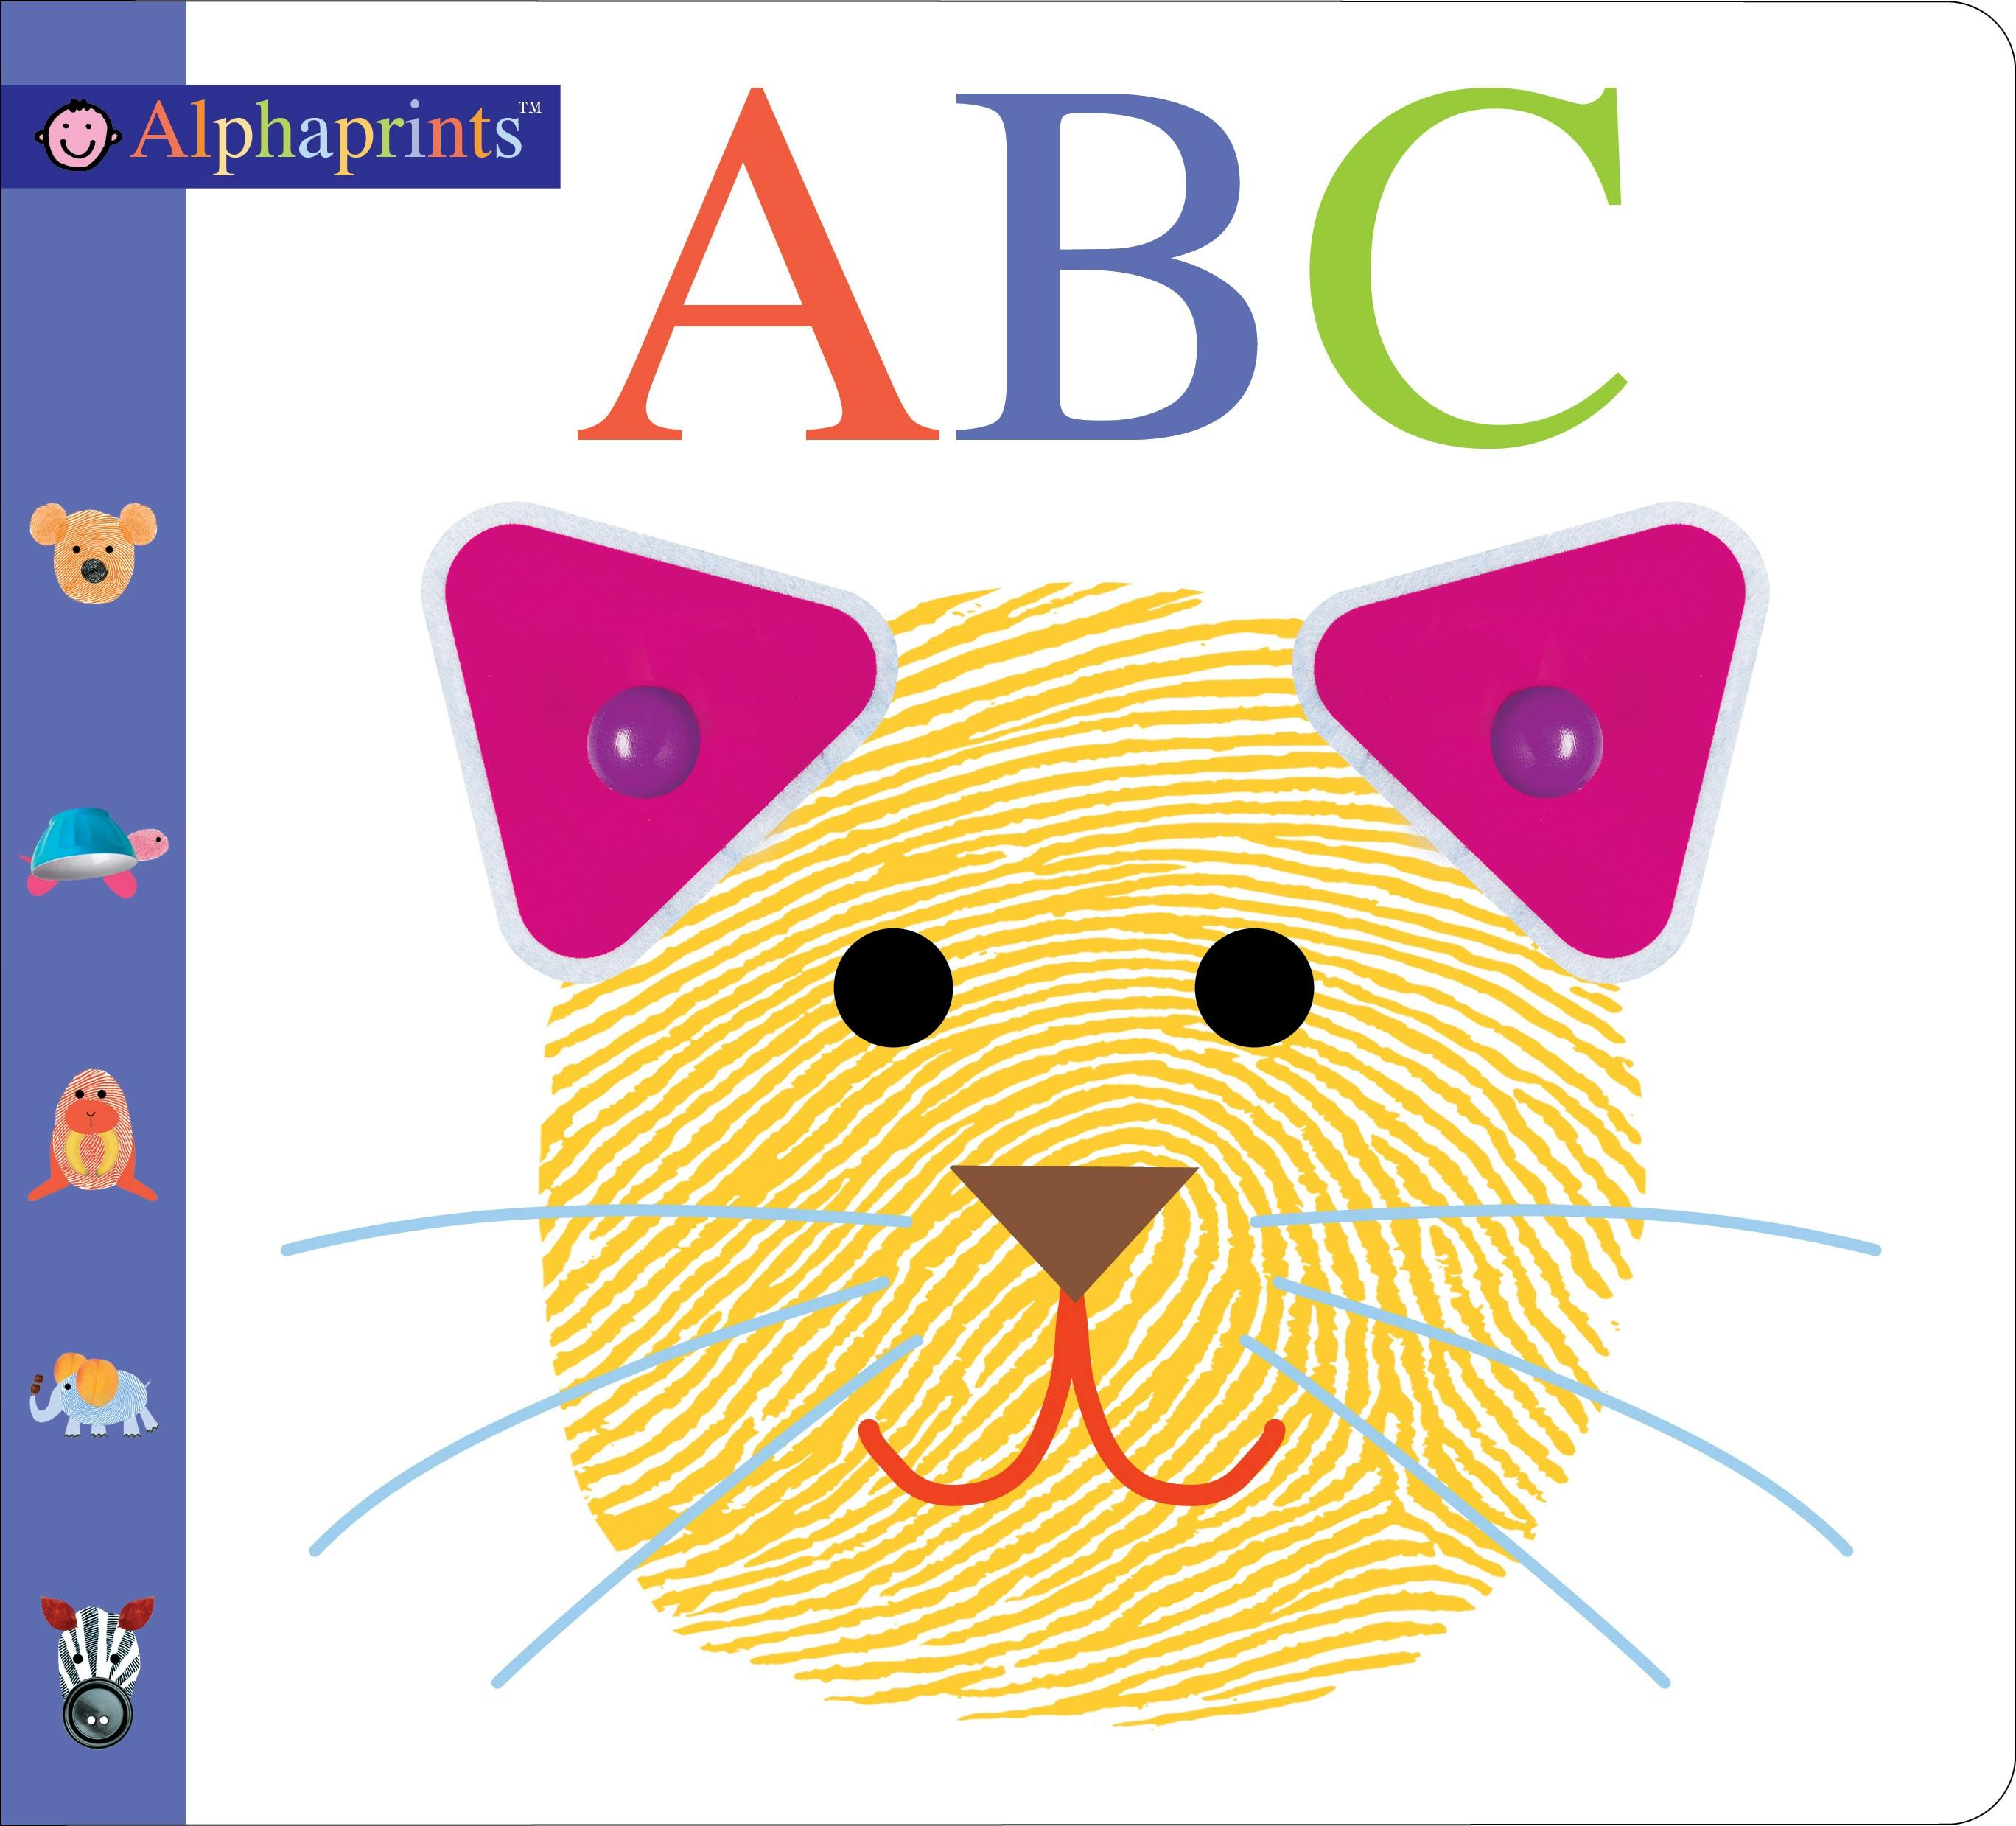 Image of Alphaprints: ABC